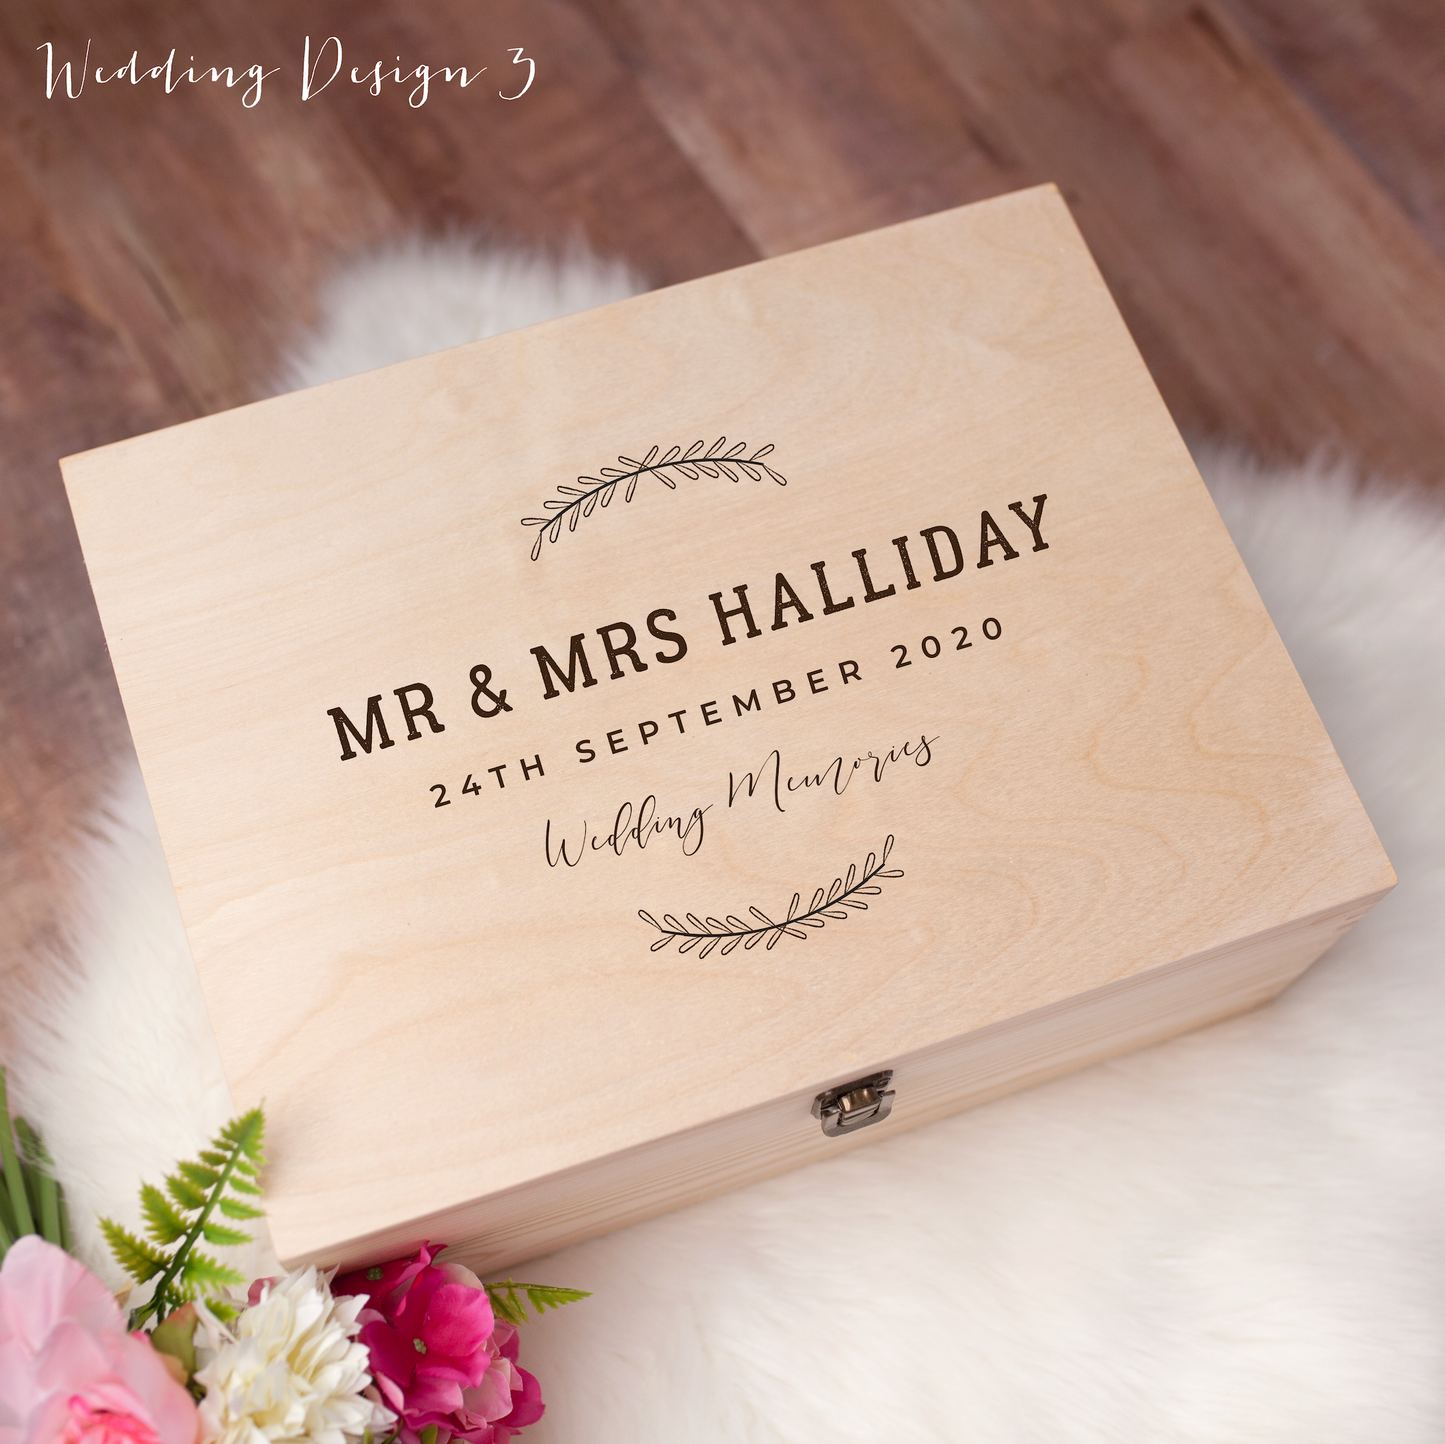 Memory Box - Wedding Design 3